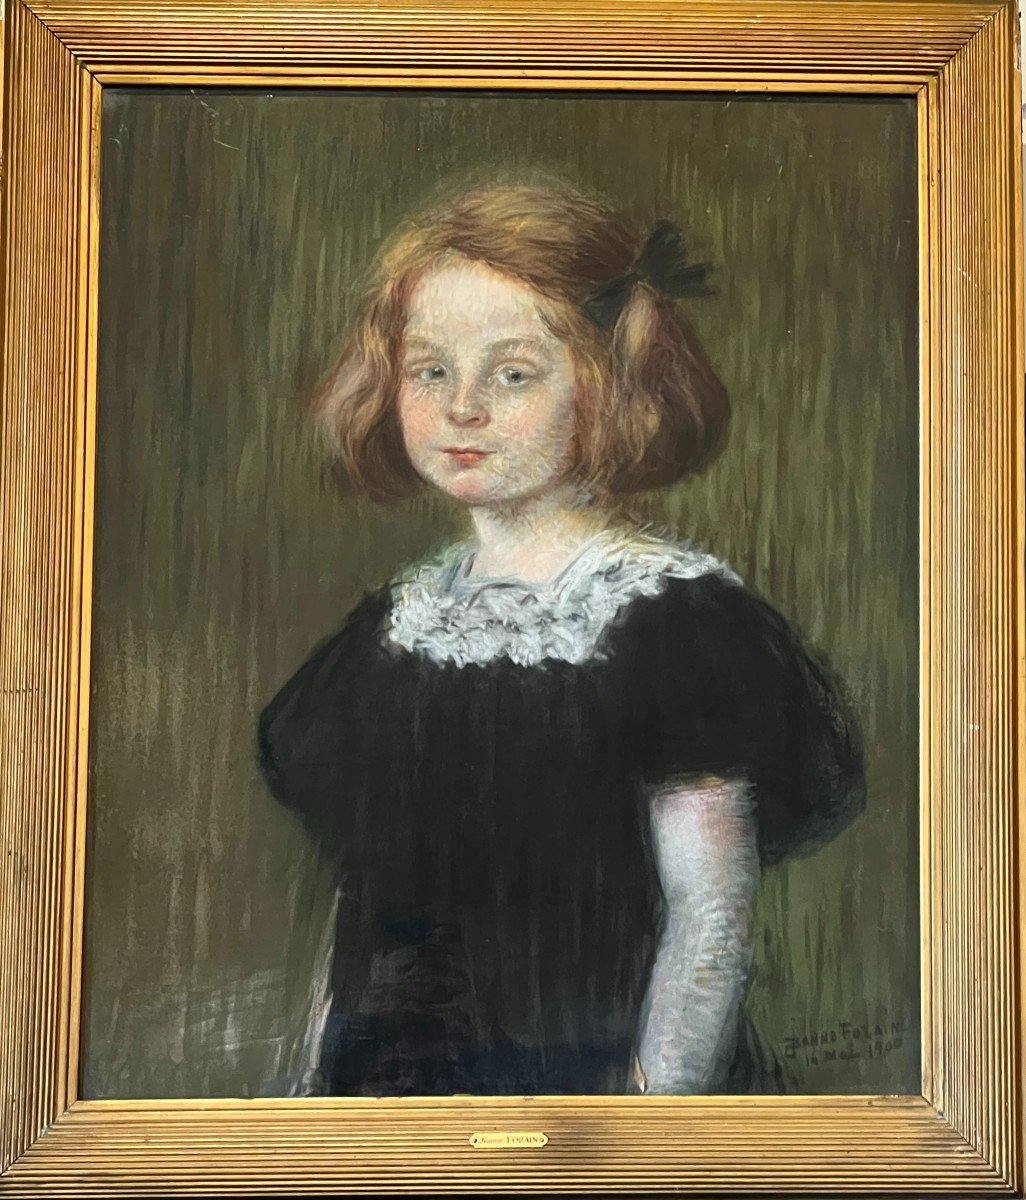 Jeanne Forain (1865-1954) - Portrait De Fillette, 1900